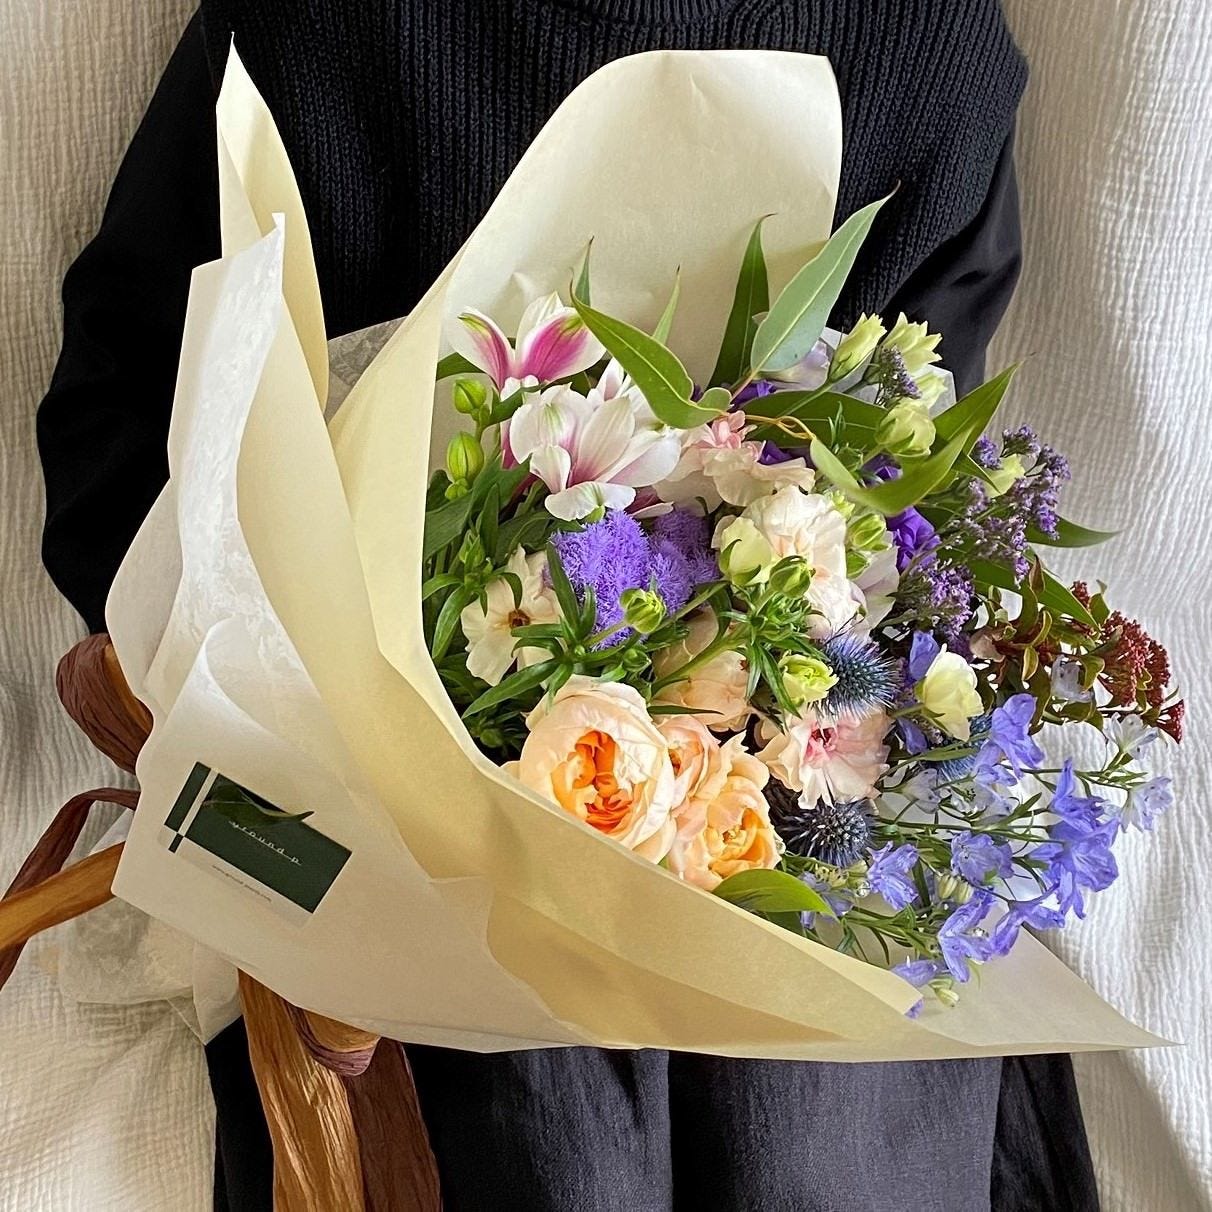 Bouquet LLサイズ
エリスらしい花束もご用意可能です